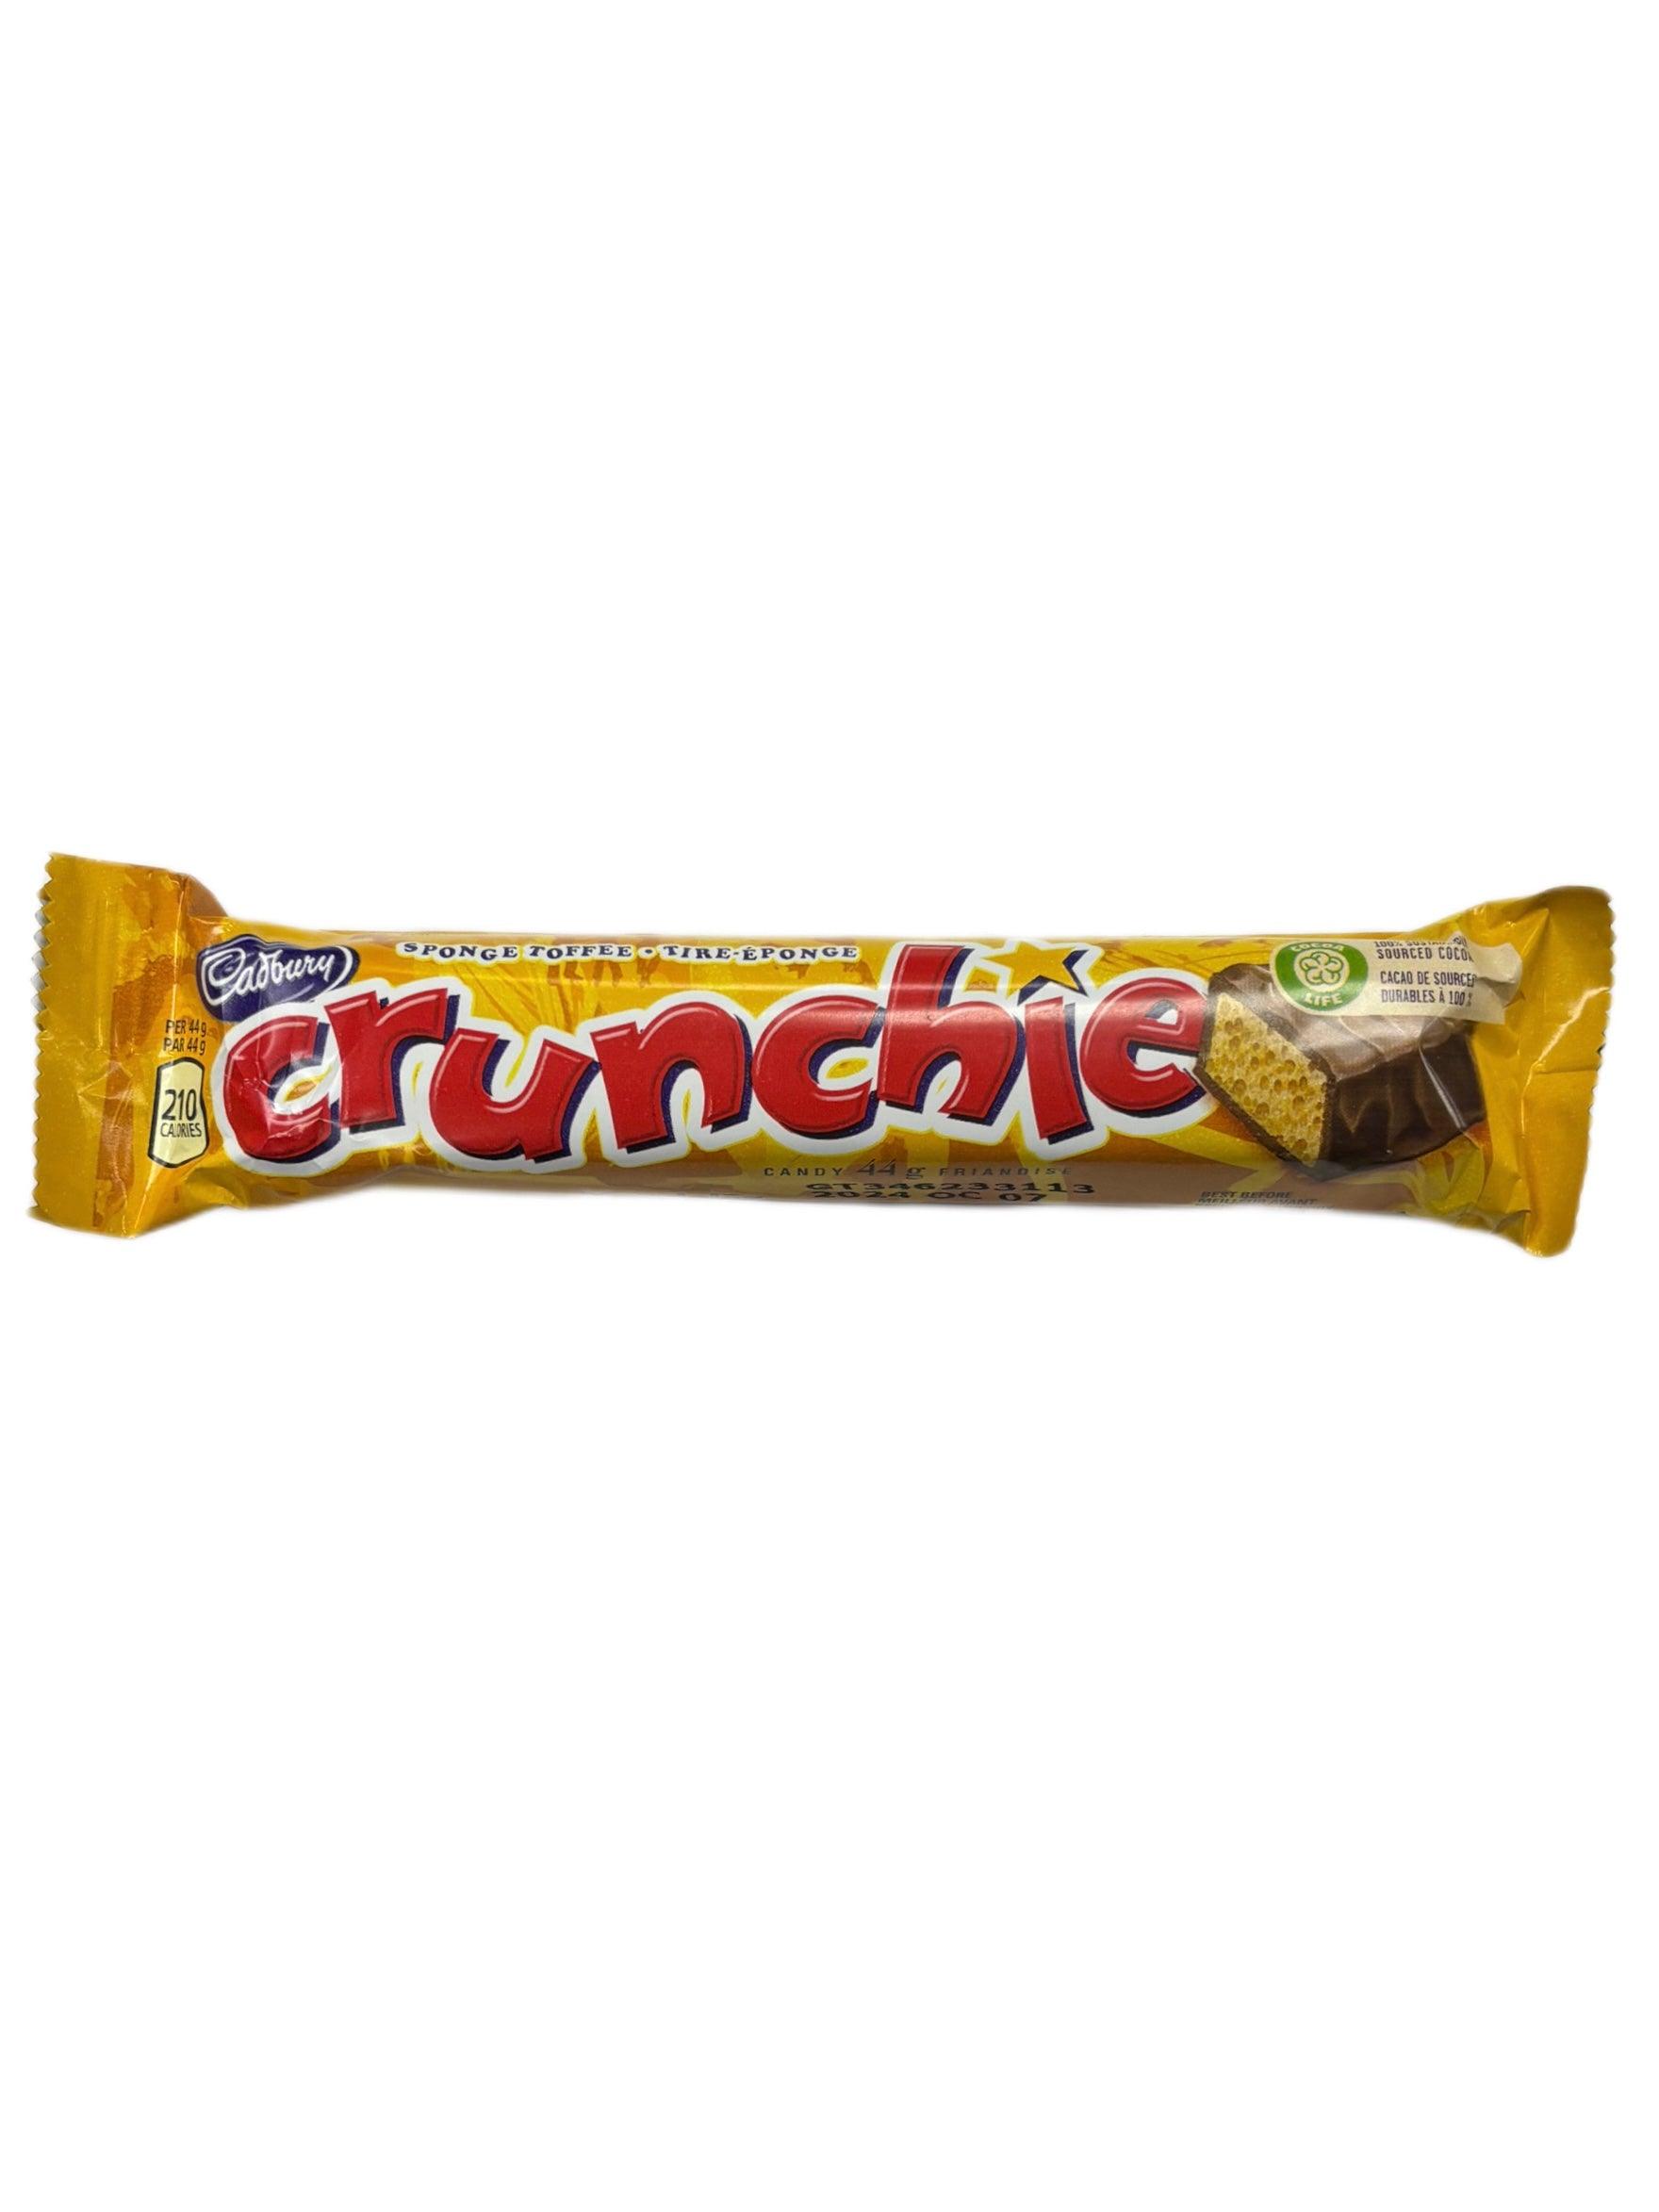 Cadbury Crunchie Chocolate Bar 44G - Canada Edition - Extreme Snacks